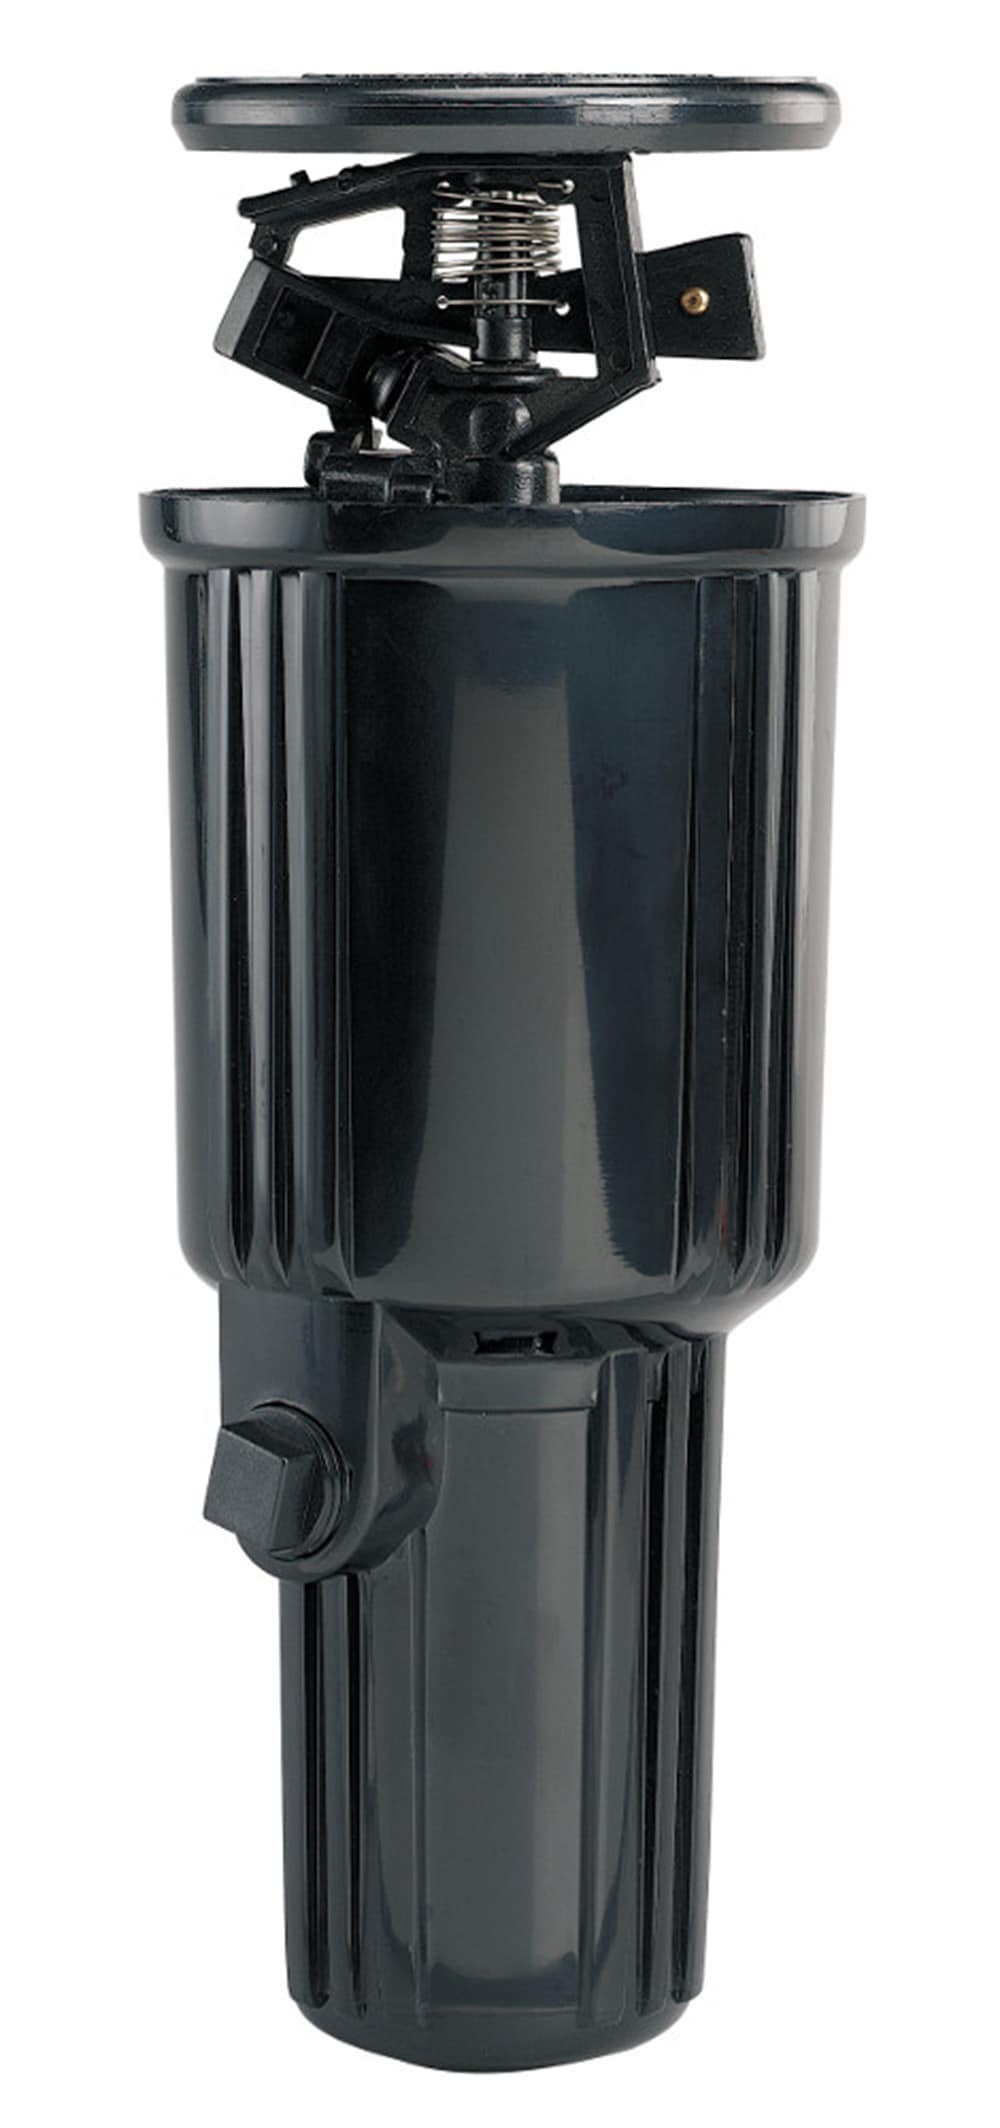 Orbit 40-ft-80-ft Adjustable Spray Impact Sprinkler in the